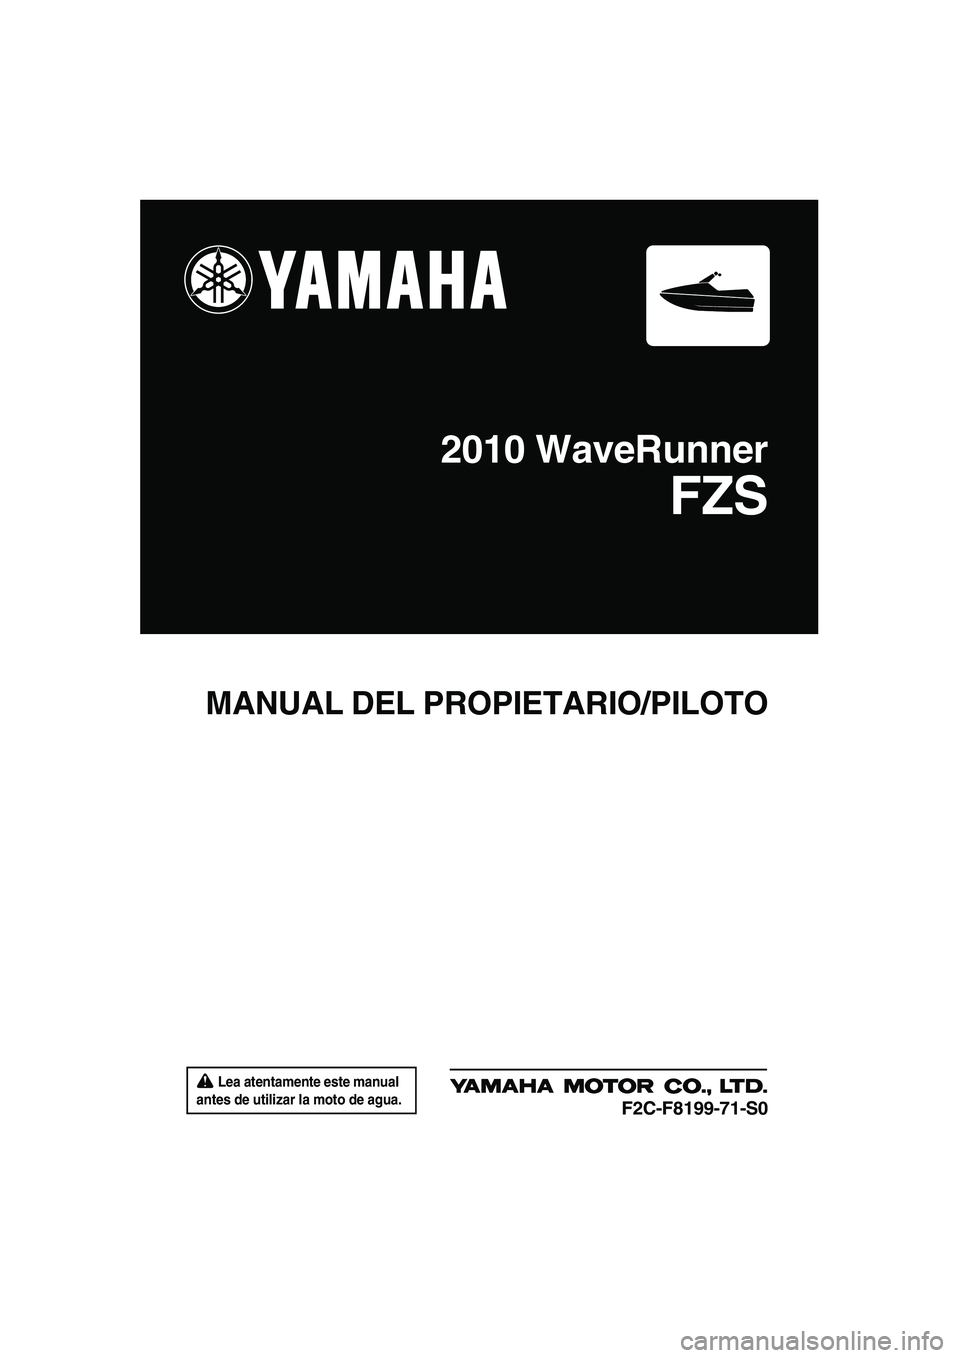 YAMAHA FZS 2010  Manuale de Empleo (in Spanish)  Lea atentamente este manual 
antes de utilizar la moto de agua.
MANUAL DEL PROPIETARIO/PILOTO
2010 WaveRunner
FZS
F2C-F8199-71-S0
UF2C71S0.book  Page 1  Tuesday, July 14, 2009  11:41 AM 